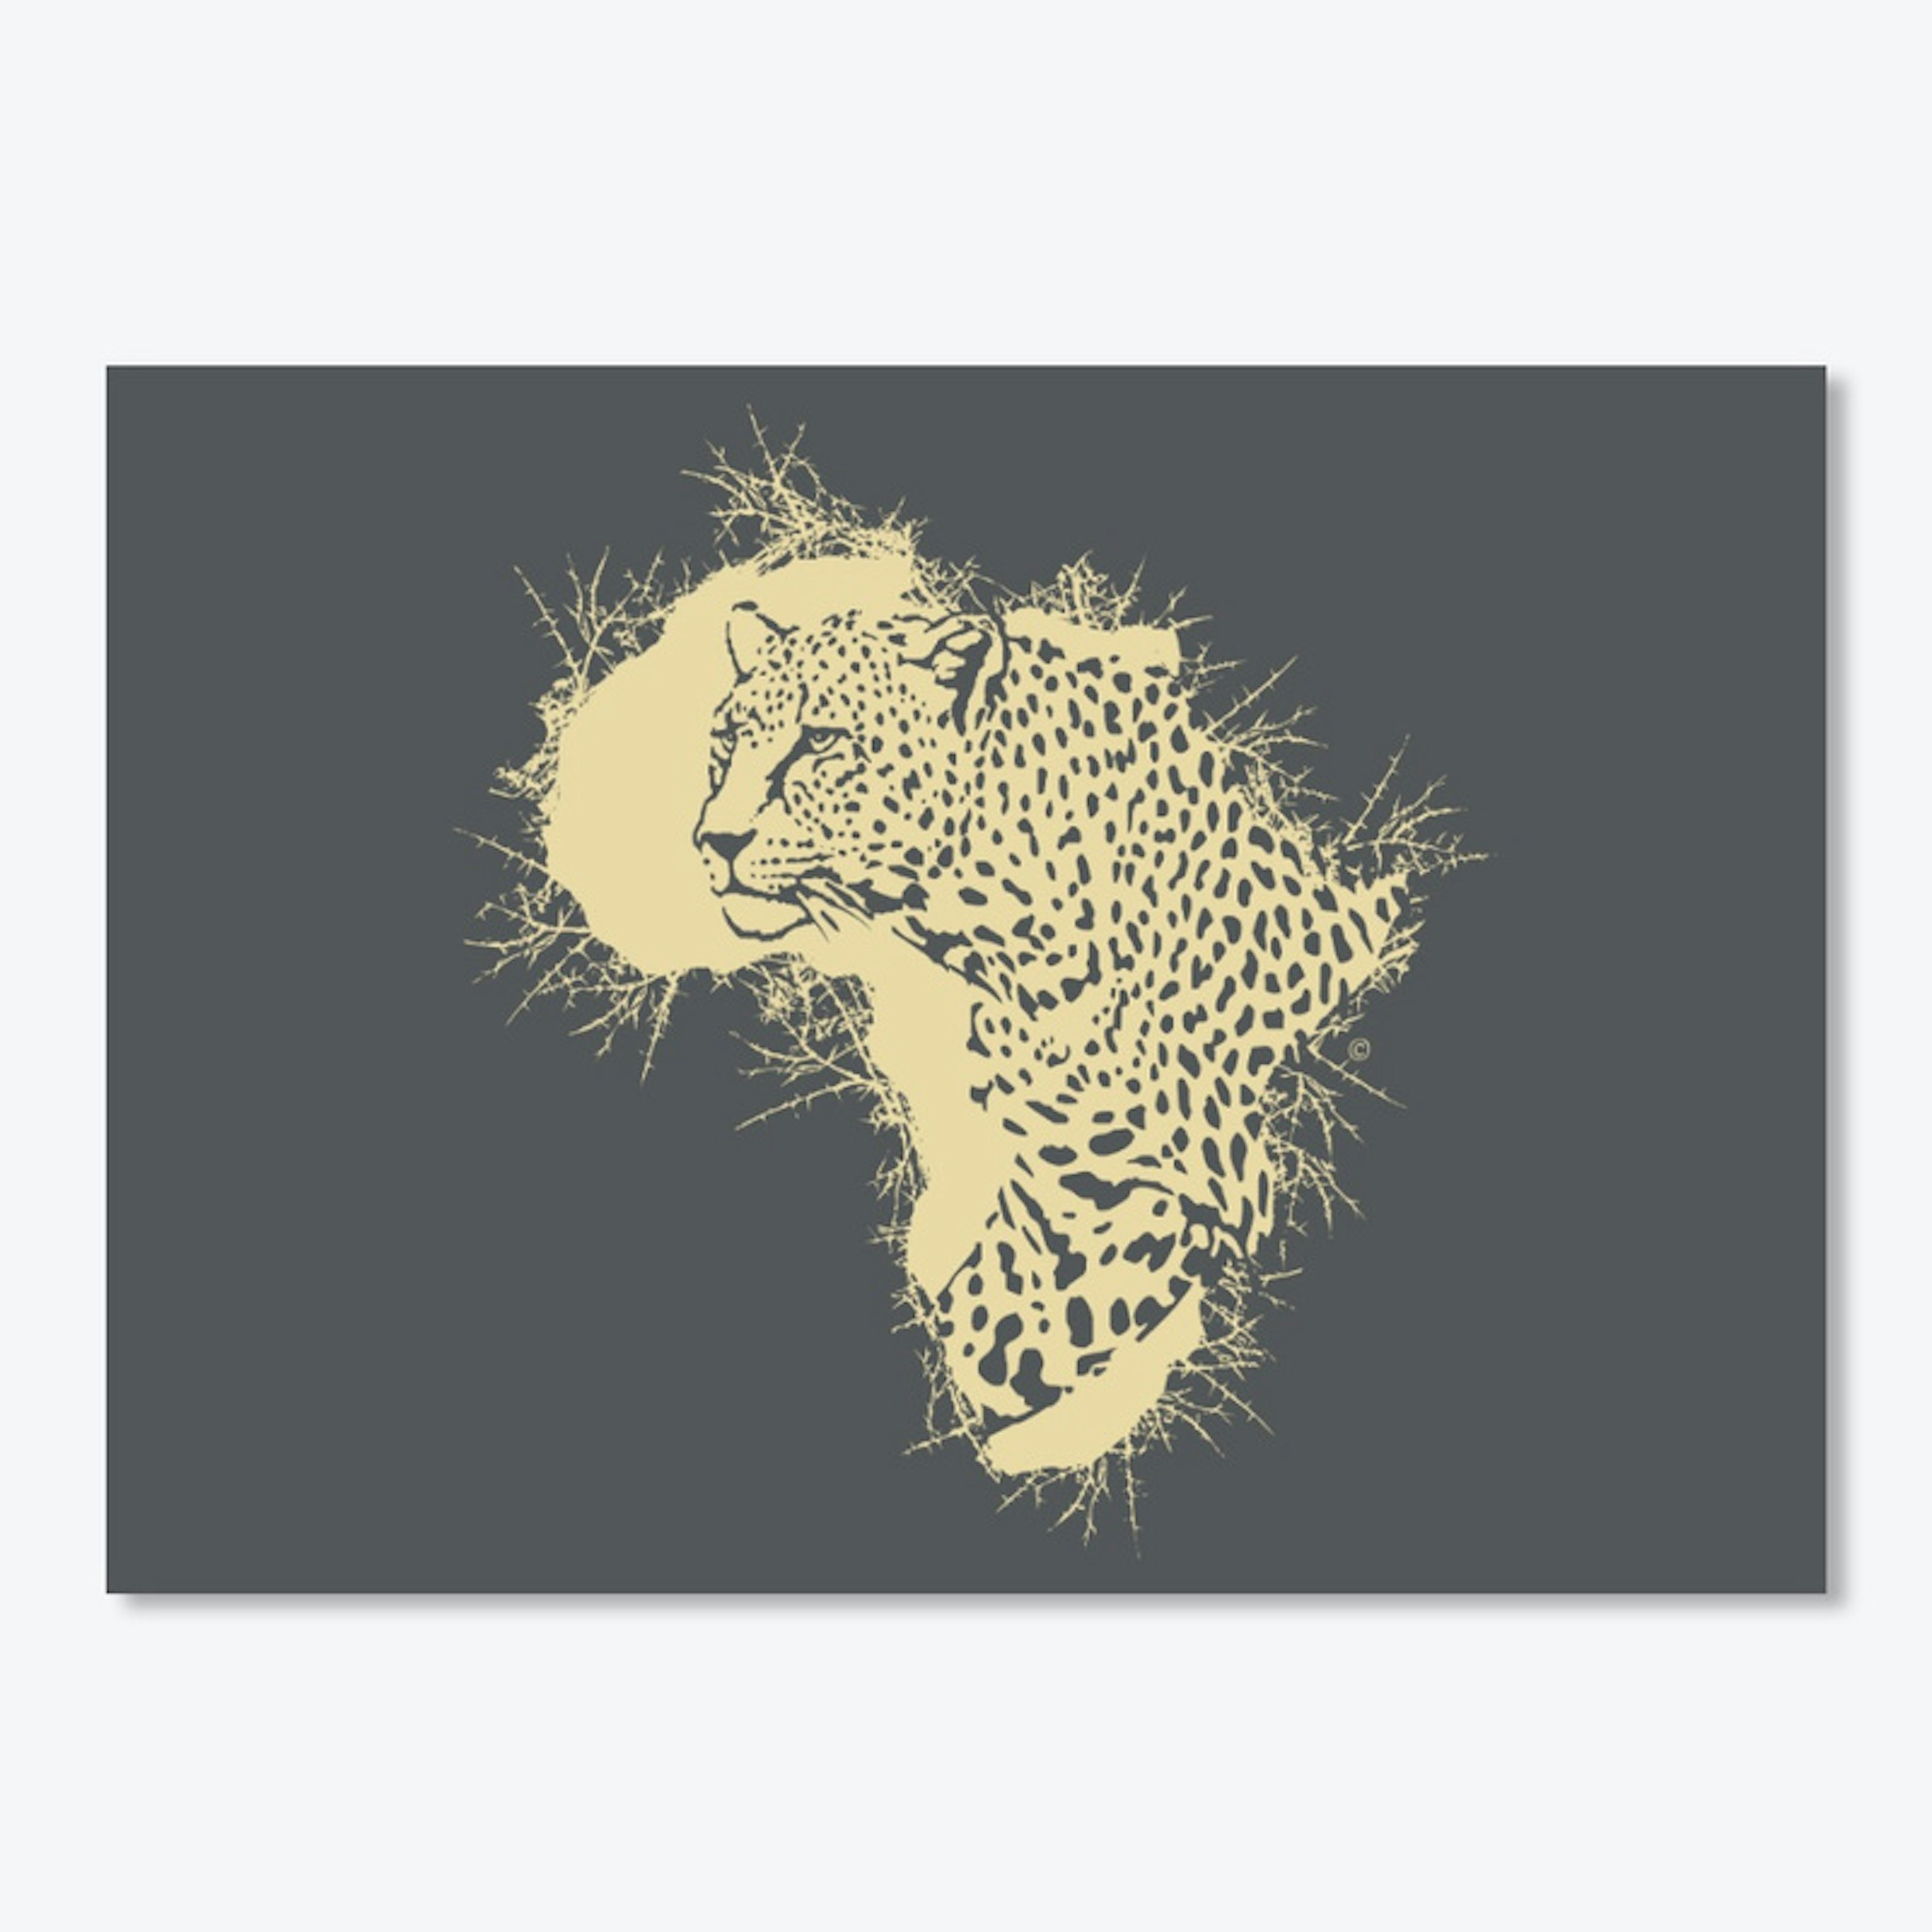 Tenikwa Leopard in Thorny Africa